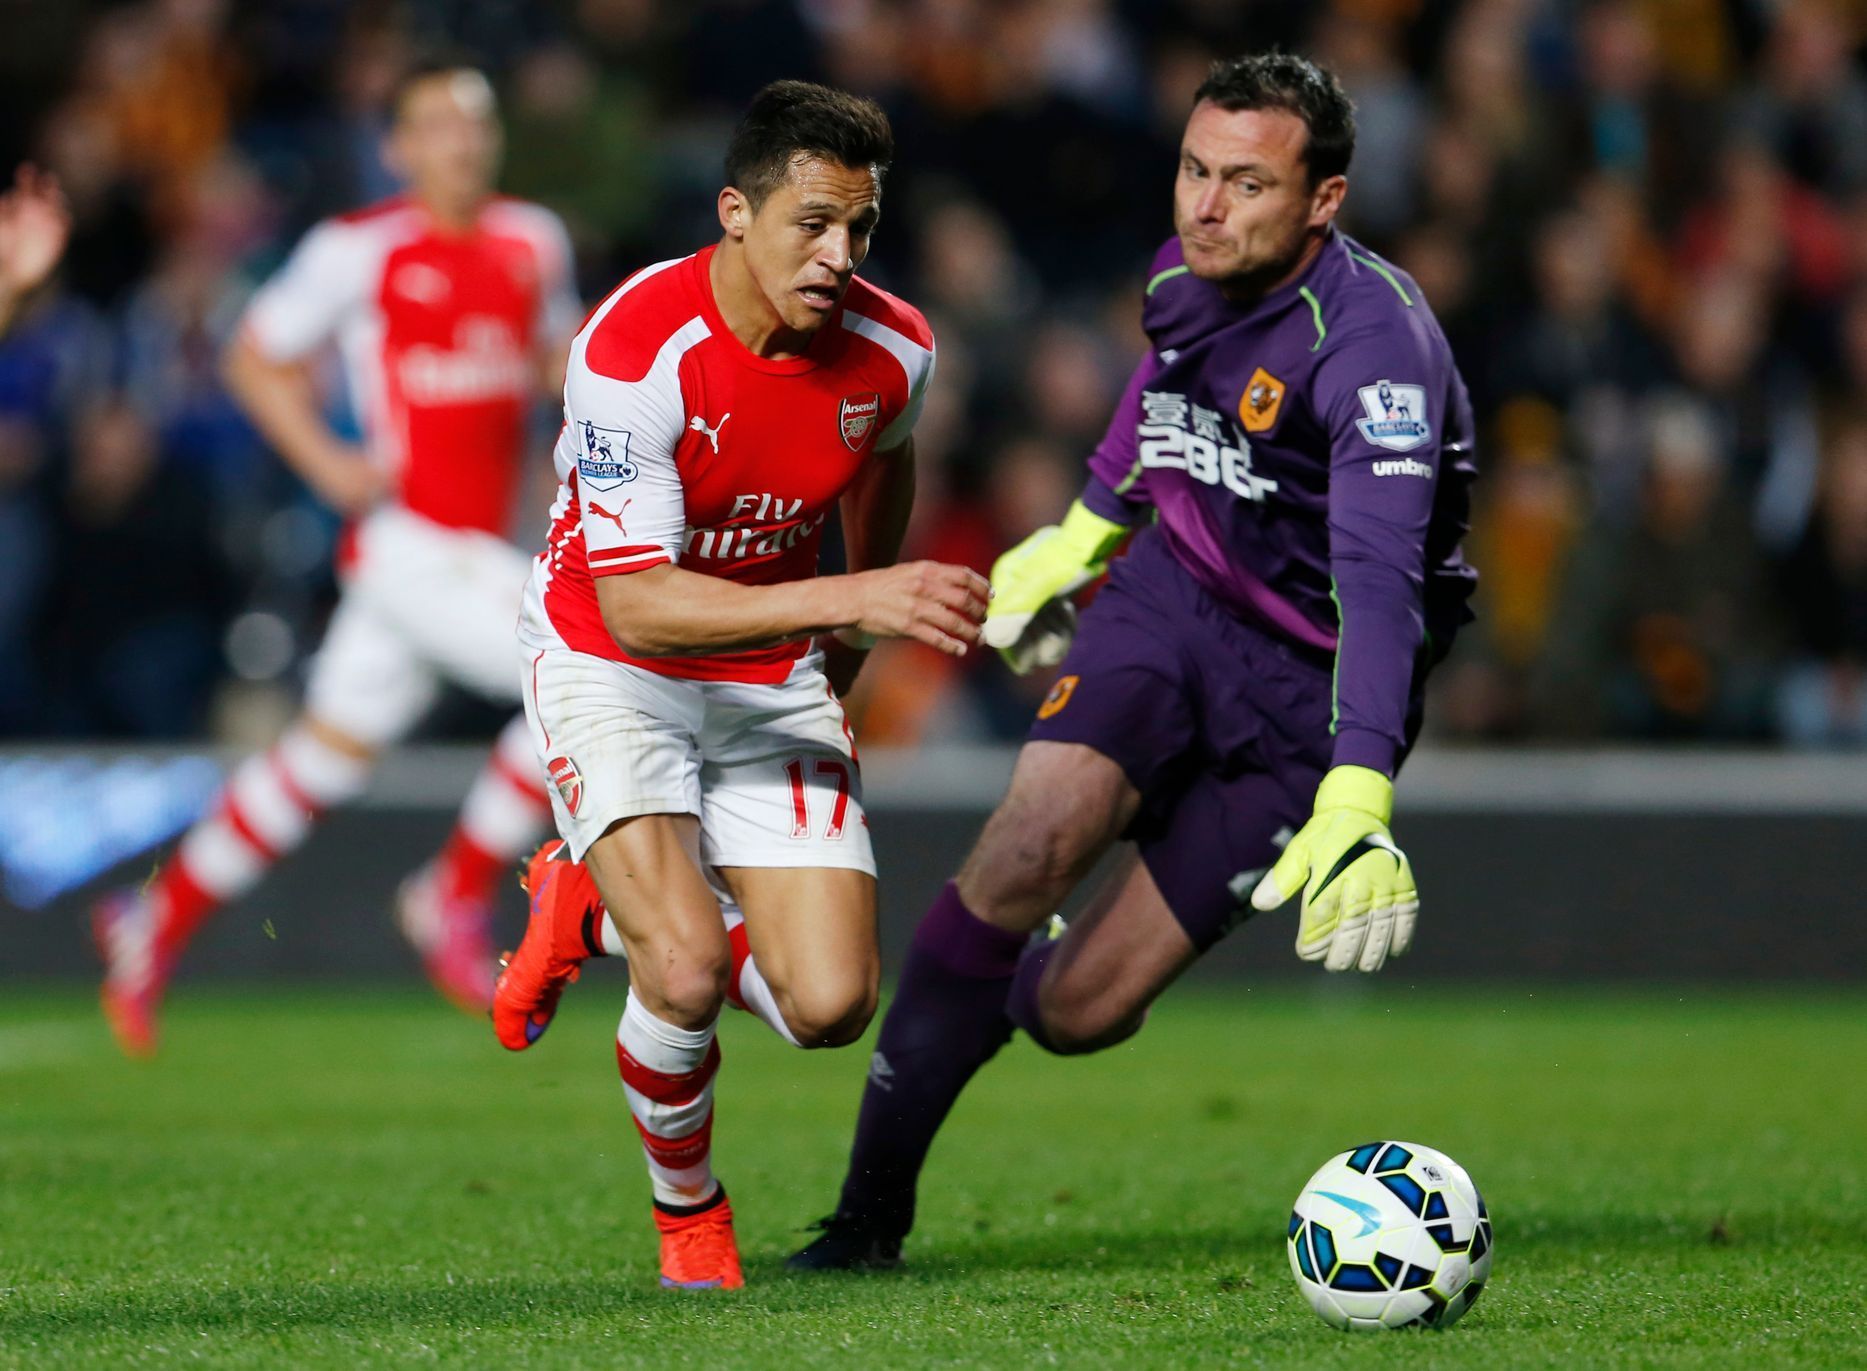 Football: Alexis Sanchez scores the third goal for Arsenal as Hull's Steve Harper looks on